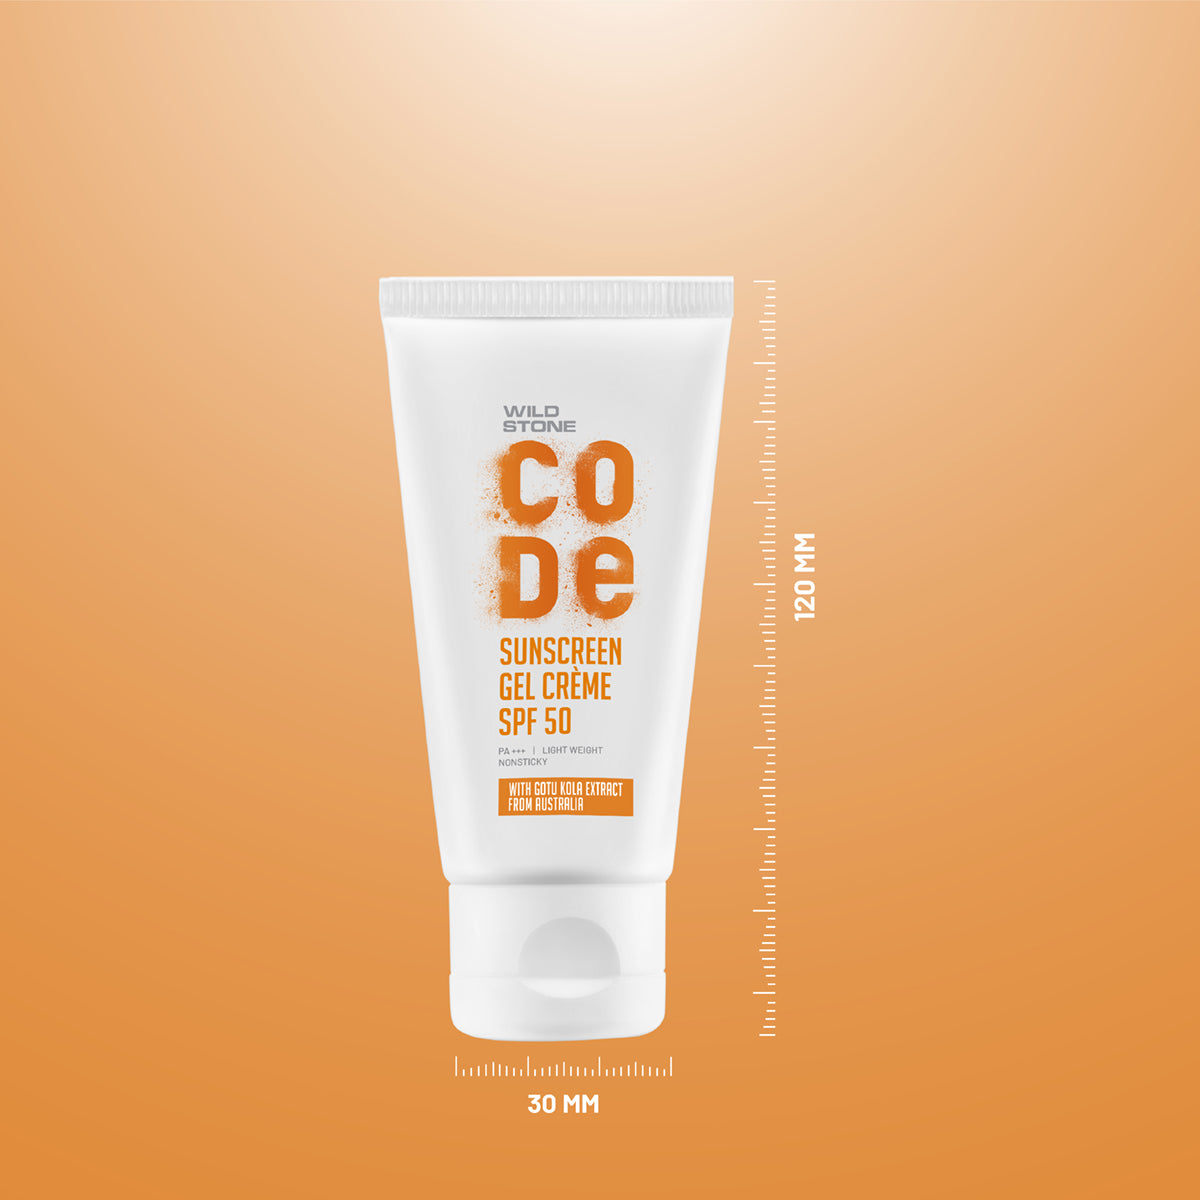 Sun Safe Bundle - Sunscreen Gel Creme, Hydrating Face Moisturizer, Beard Wash & Iridium Body Perfume